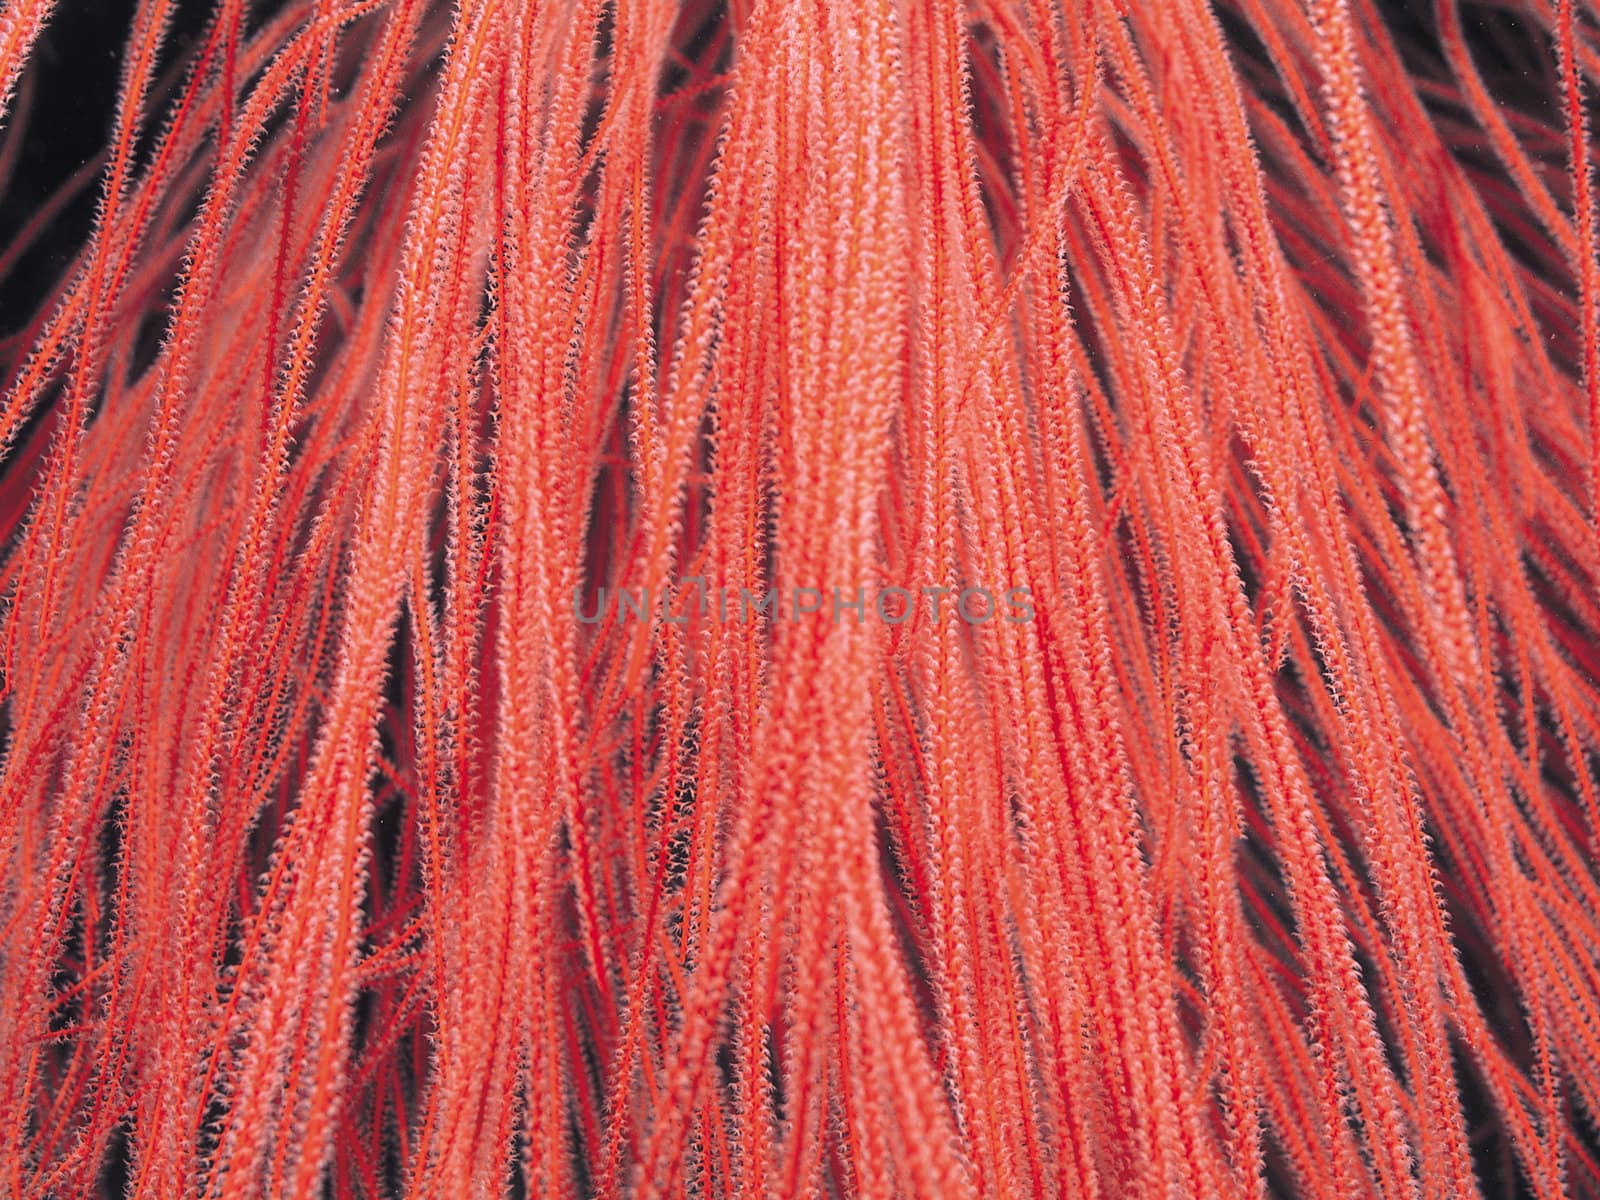 Corals by richardcoke